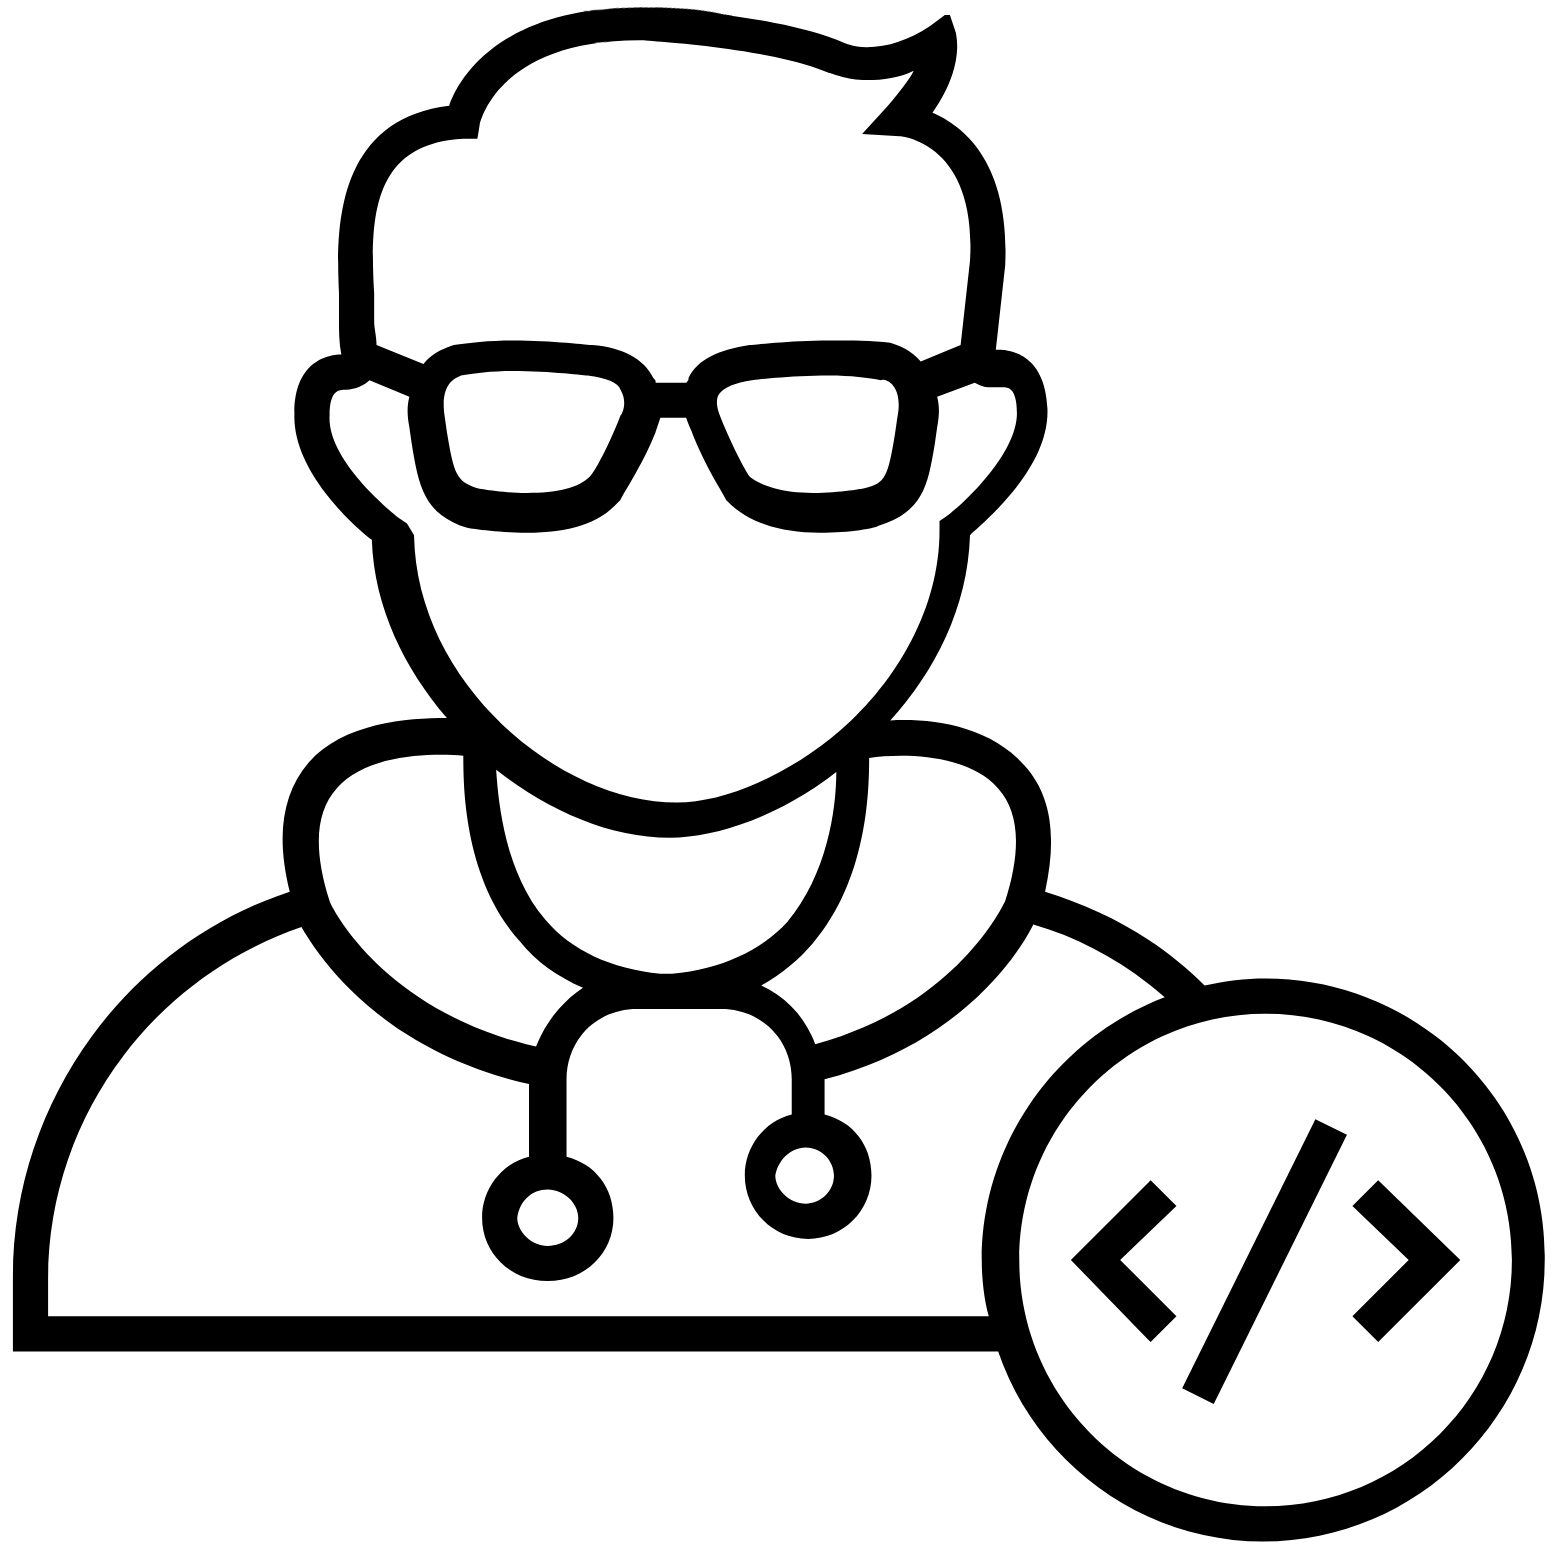 Developer. Icon (c) by Creative Stall - The Noun Project